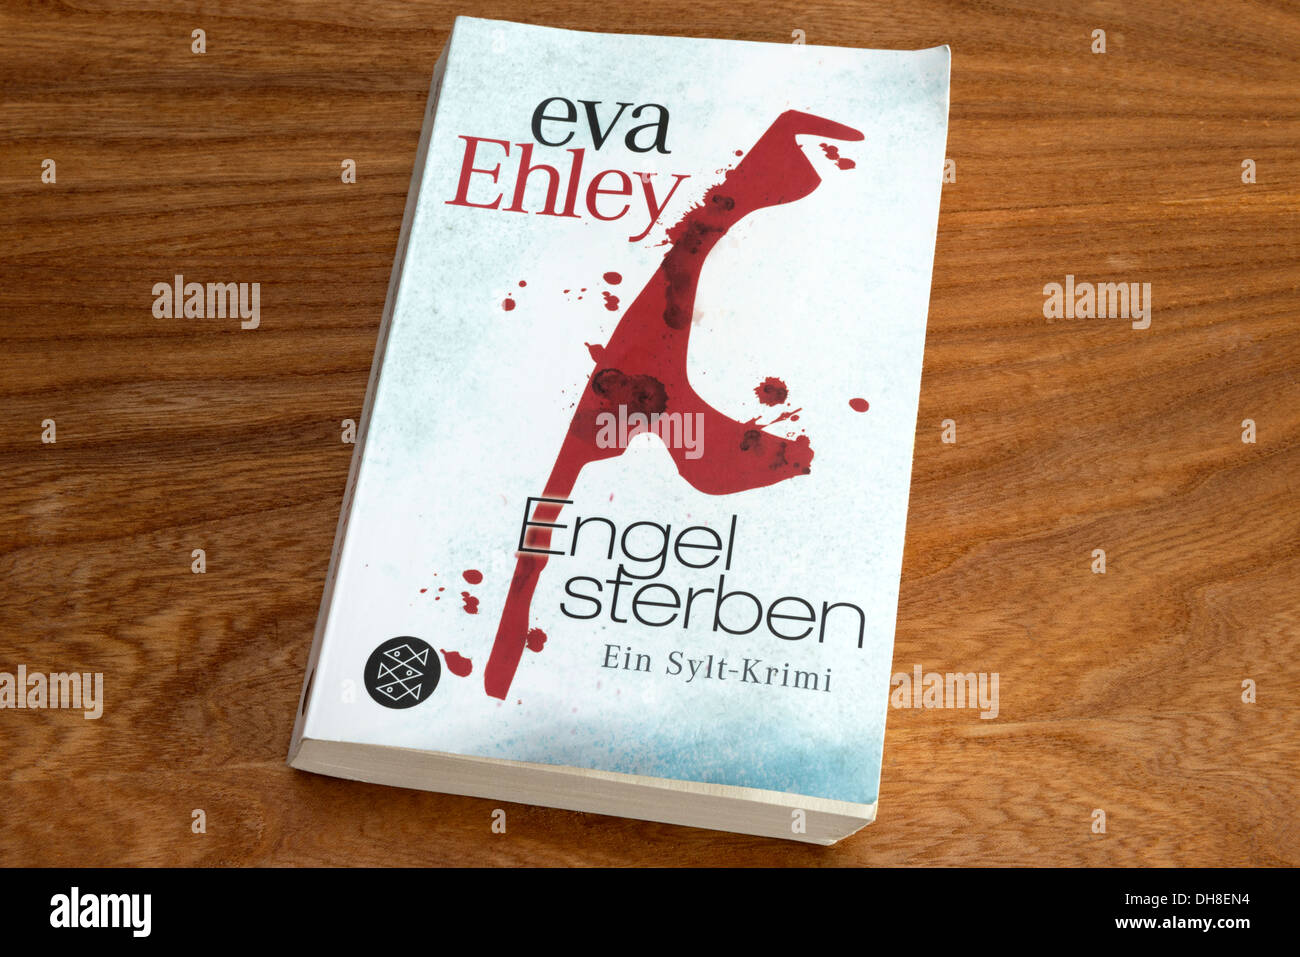 Eva Ehley Engel Ein Sylt-Krimi Sterben novela en rústica Foto de stock